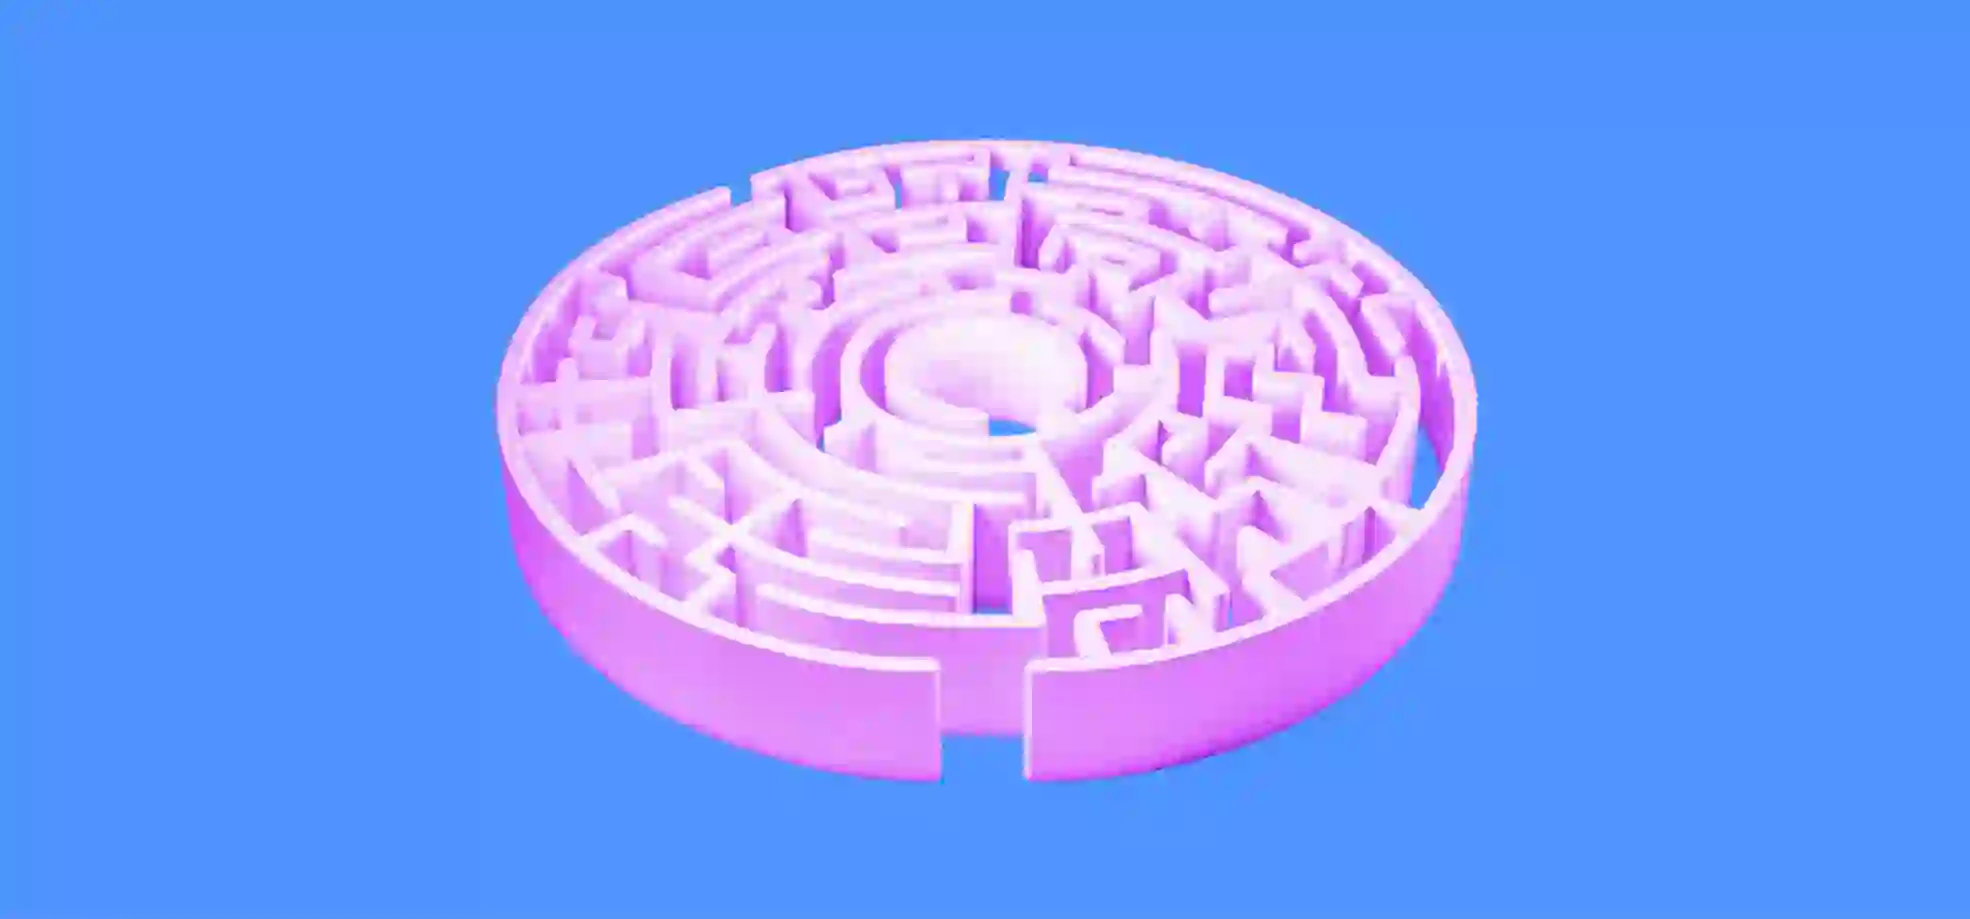 A pink labyrinth on blue background